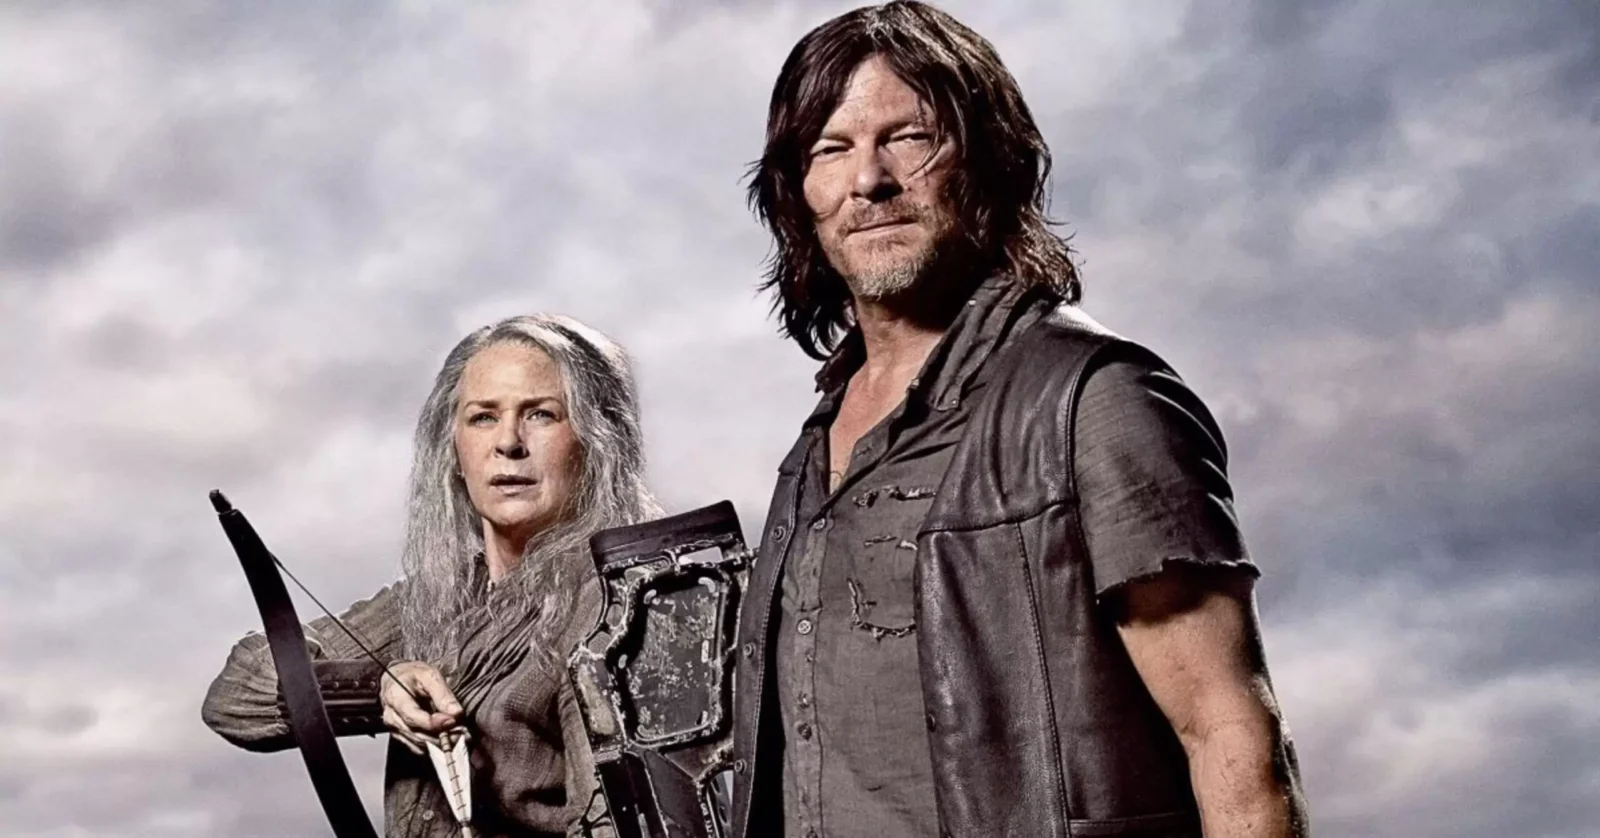 Carol sul set di The Walking Dead: Daryl Dixon